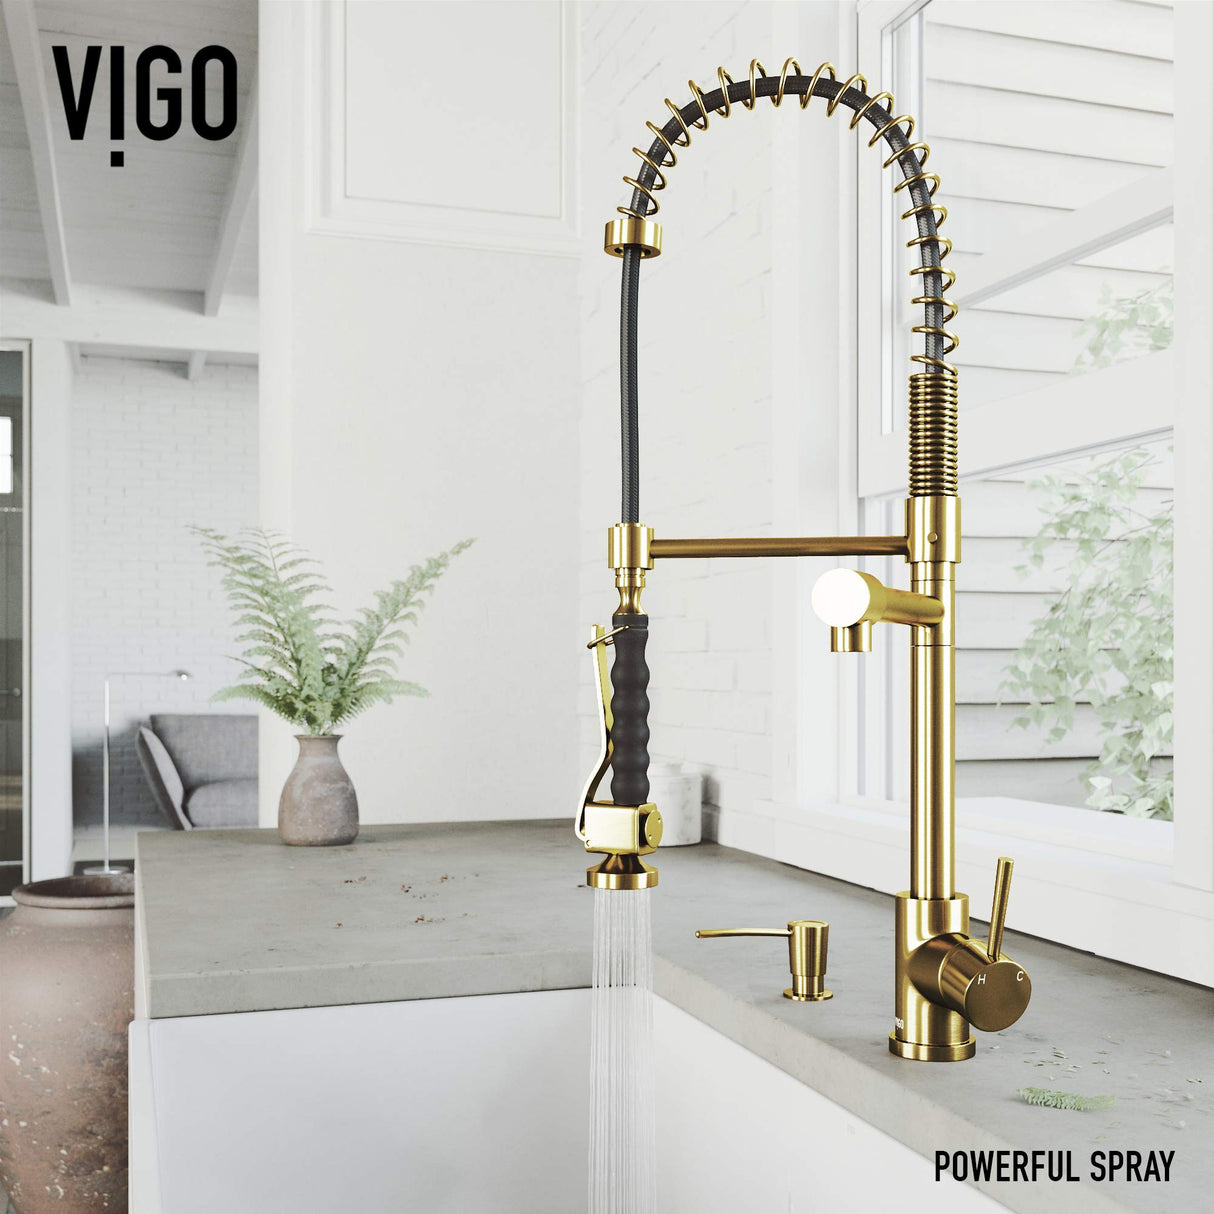 VIGO VG02007MGK2 27" H Zurich Single-Handle with Pull-Down Sprayer Kitchen Faucet with Soap Dispenser in Matte Gold